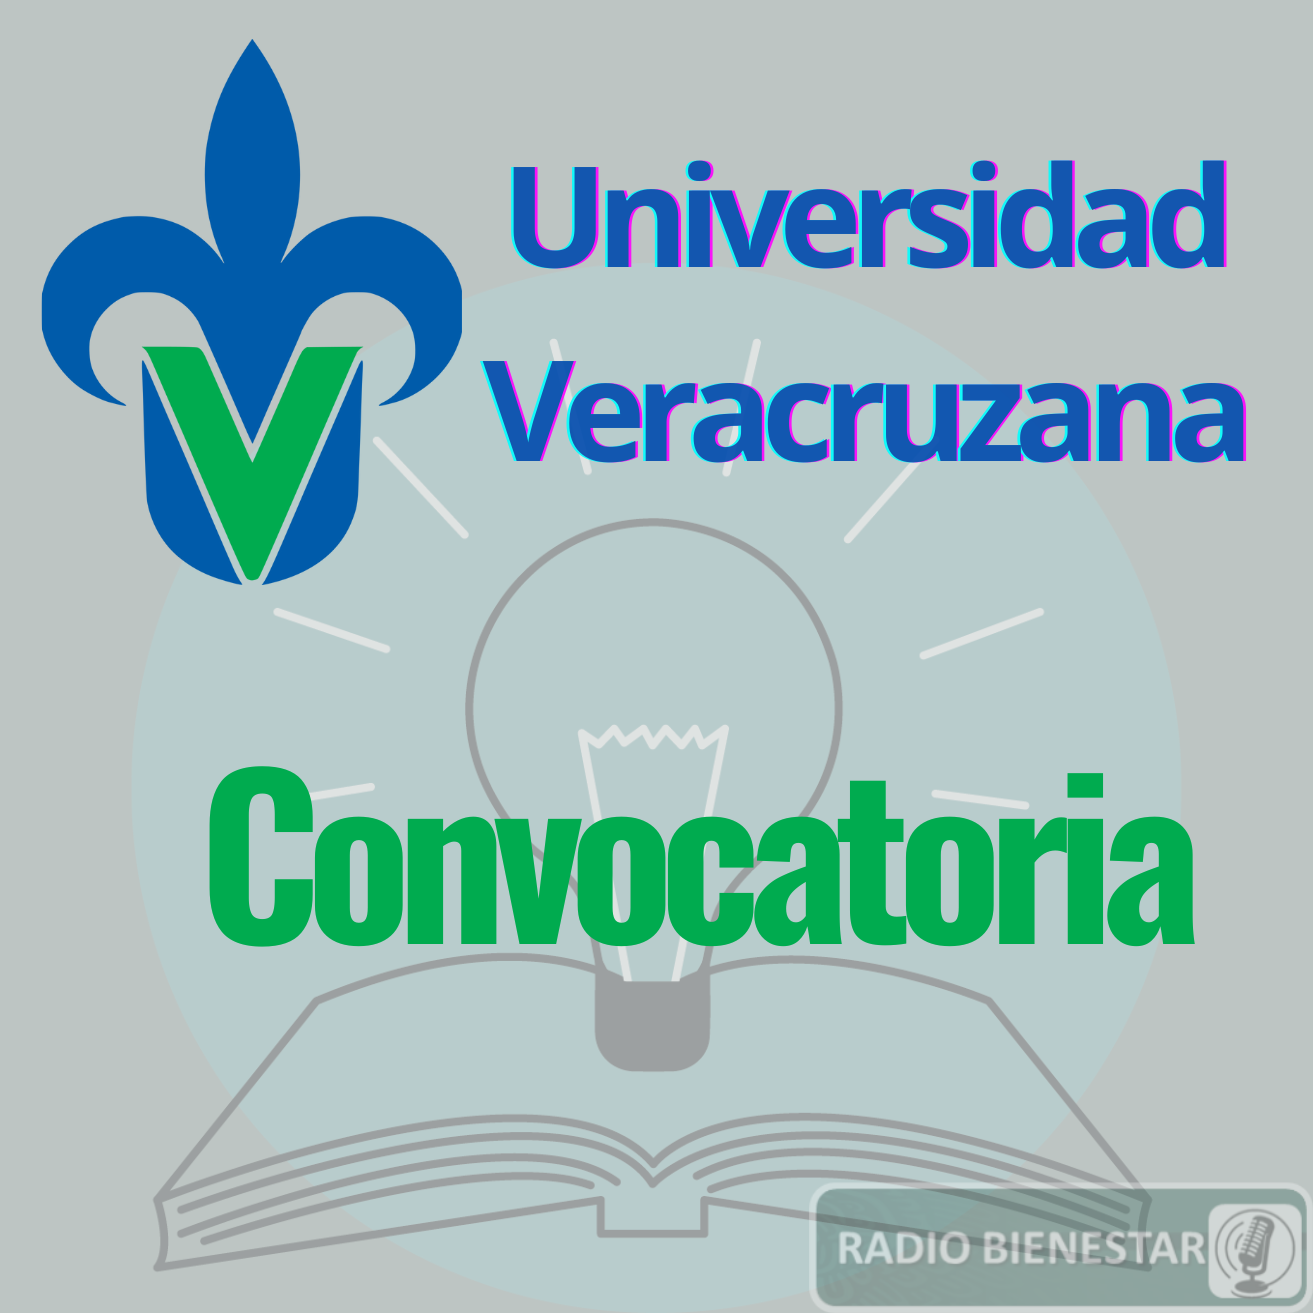 80 universidad veracruzana convocatoria